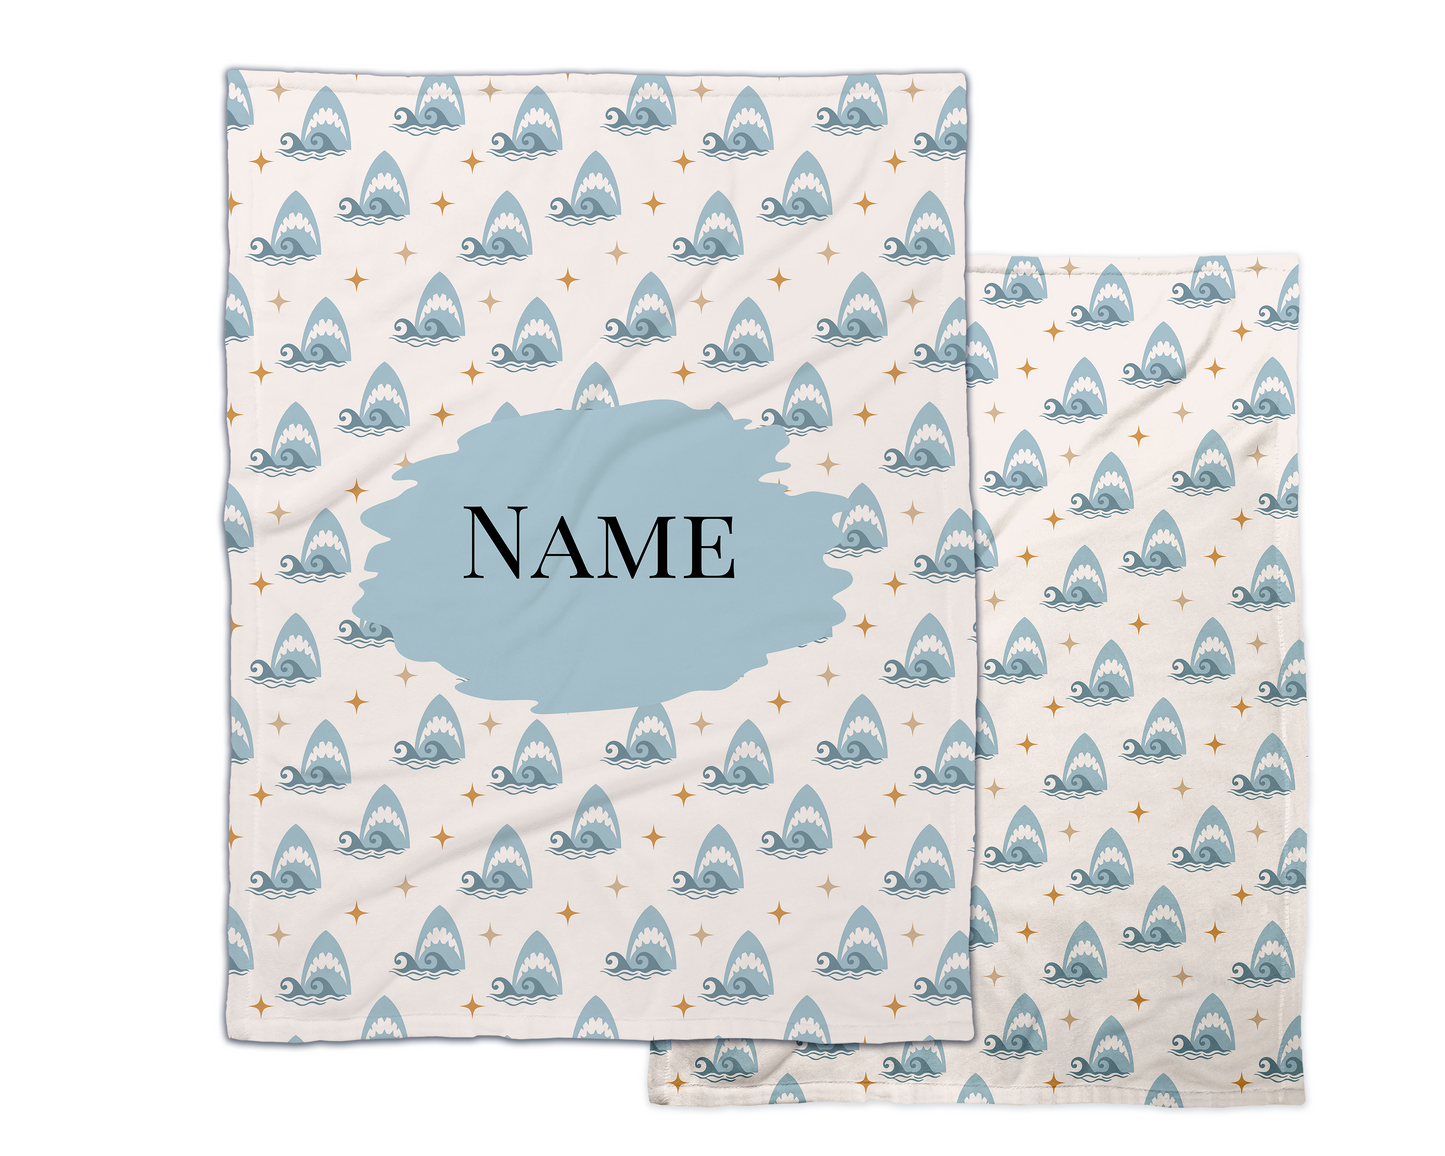 Personalized shark blanket- Custom printed cream and blue shark blanket 